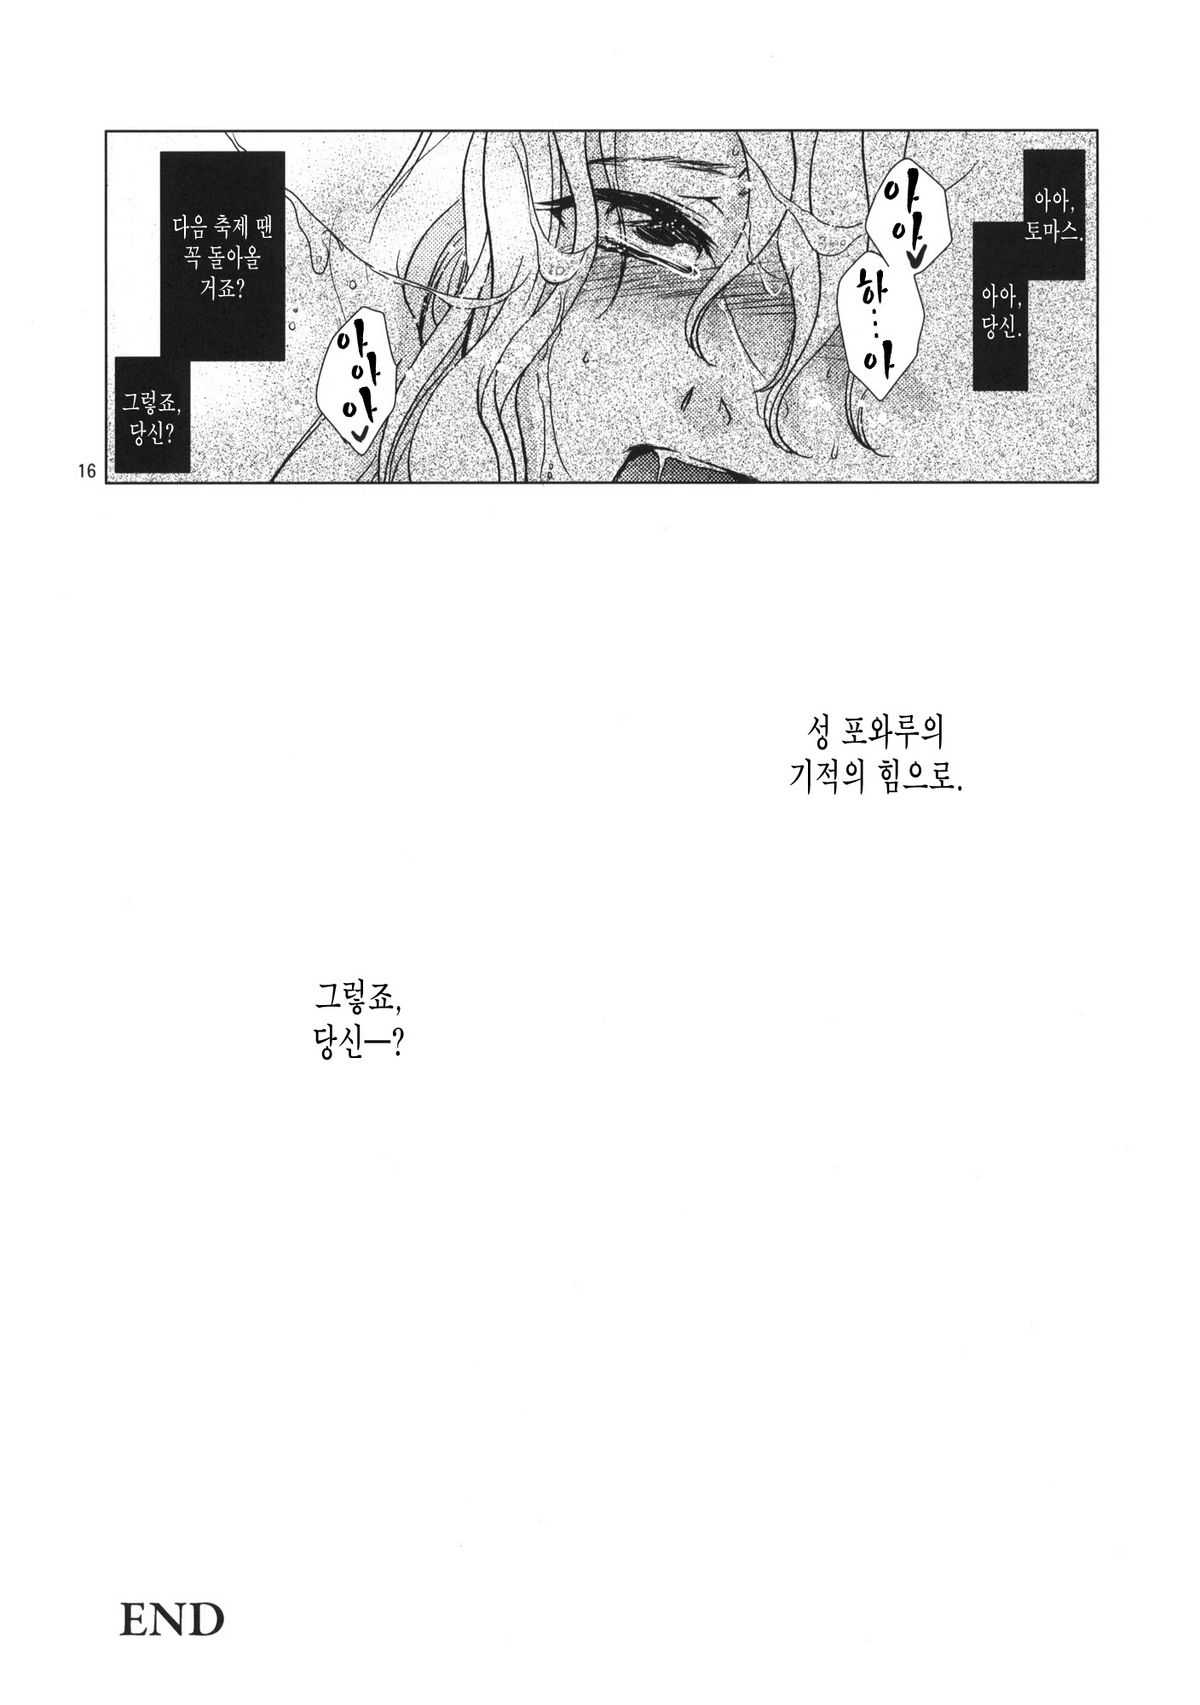 (C80) [Toko-ya (HEIZO &amp; Kitoen)] Saint Foire Festival eve・Mora (Original) (korean) (C80) (同人誌) [床子屋 (HEIZO・鬼頭えん)] Saint Foire Festival eve・Mora (オリジナル) [韓国翻訳]